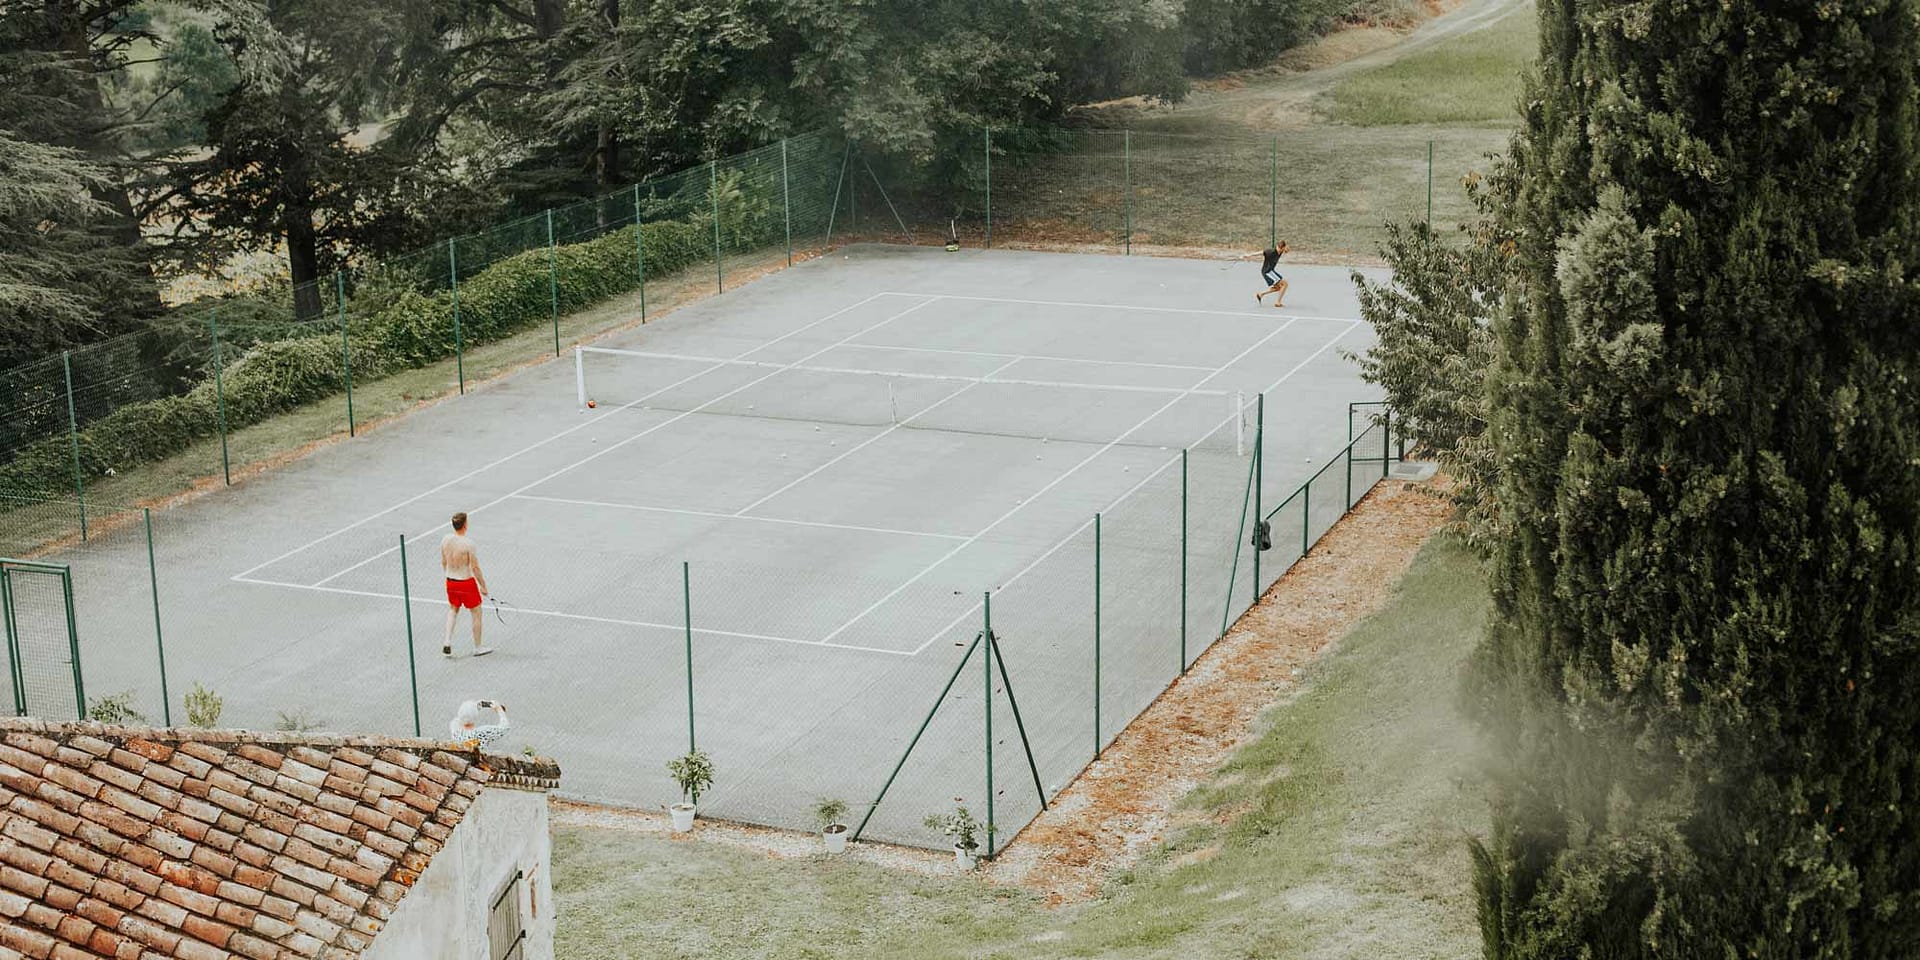 Chateau tennis court